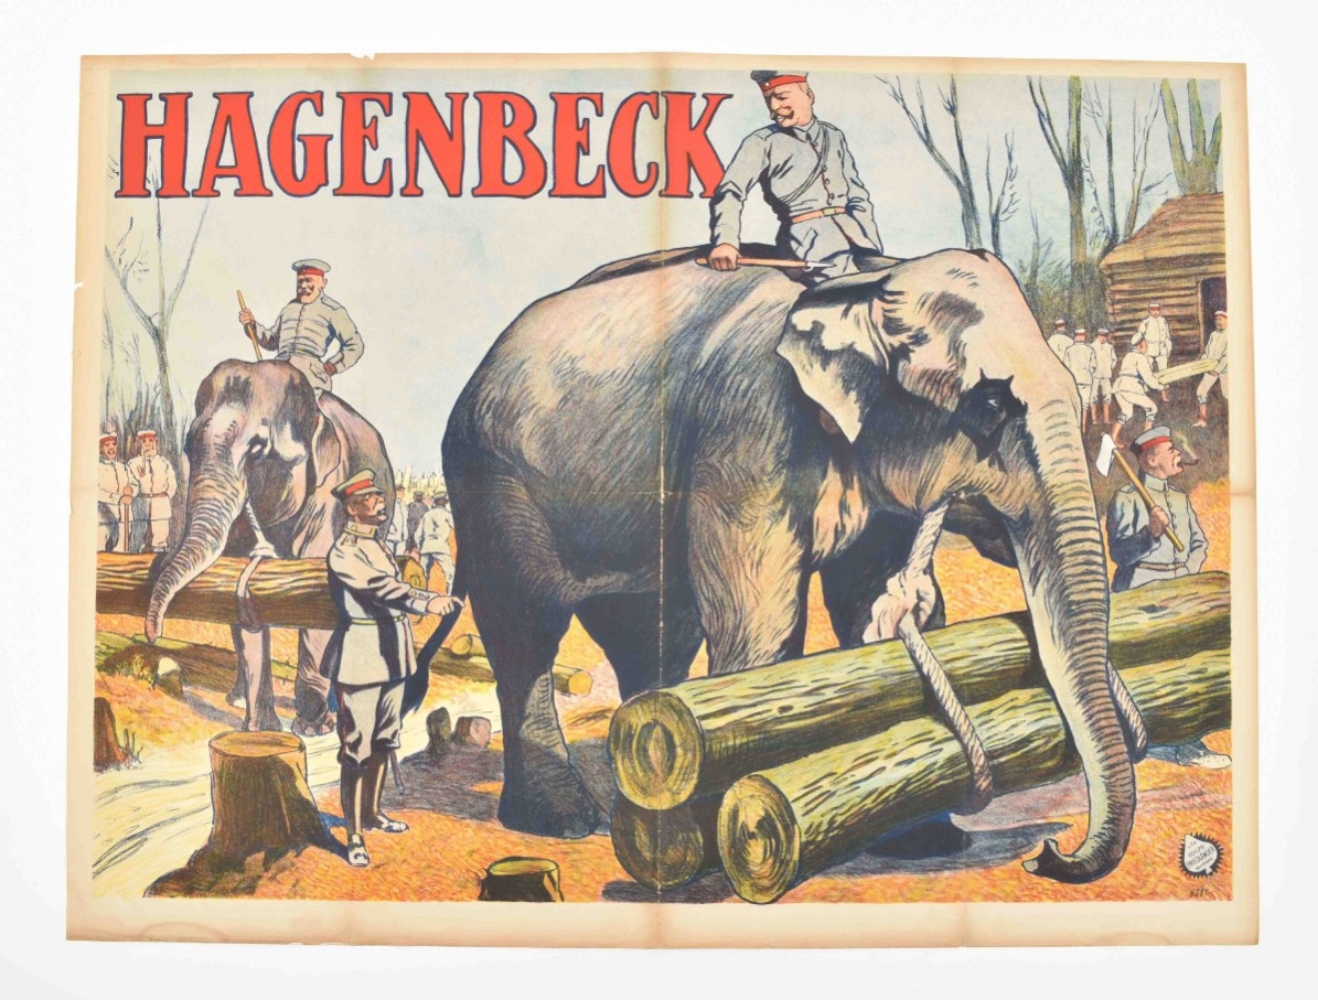 [Elephants. Hagenbeck] "Military elephants" - Image 6 of 6